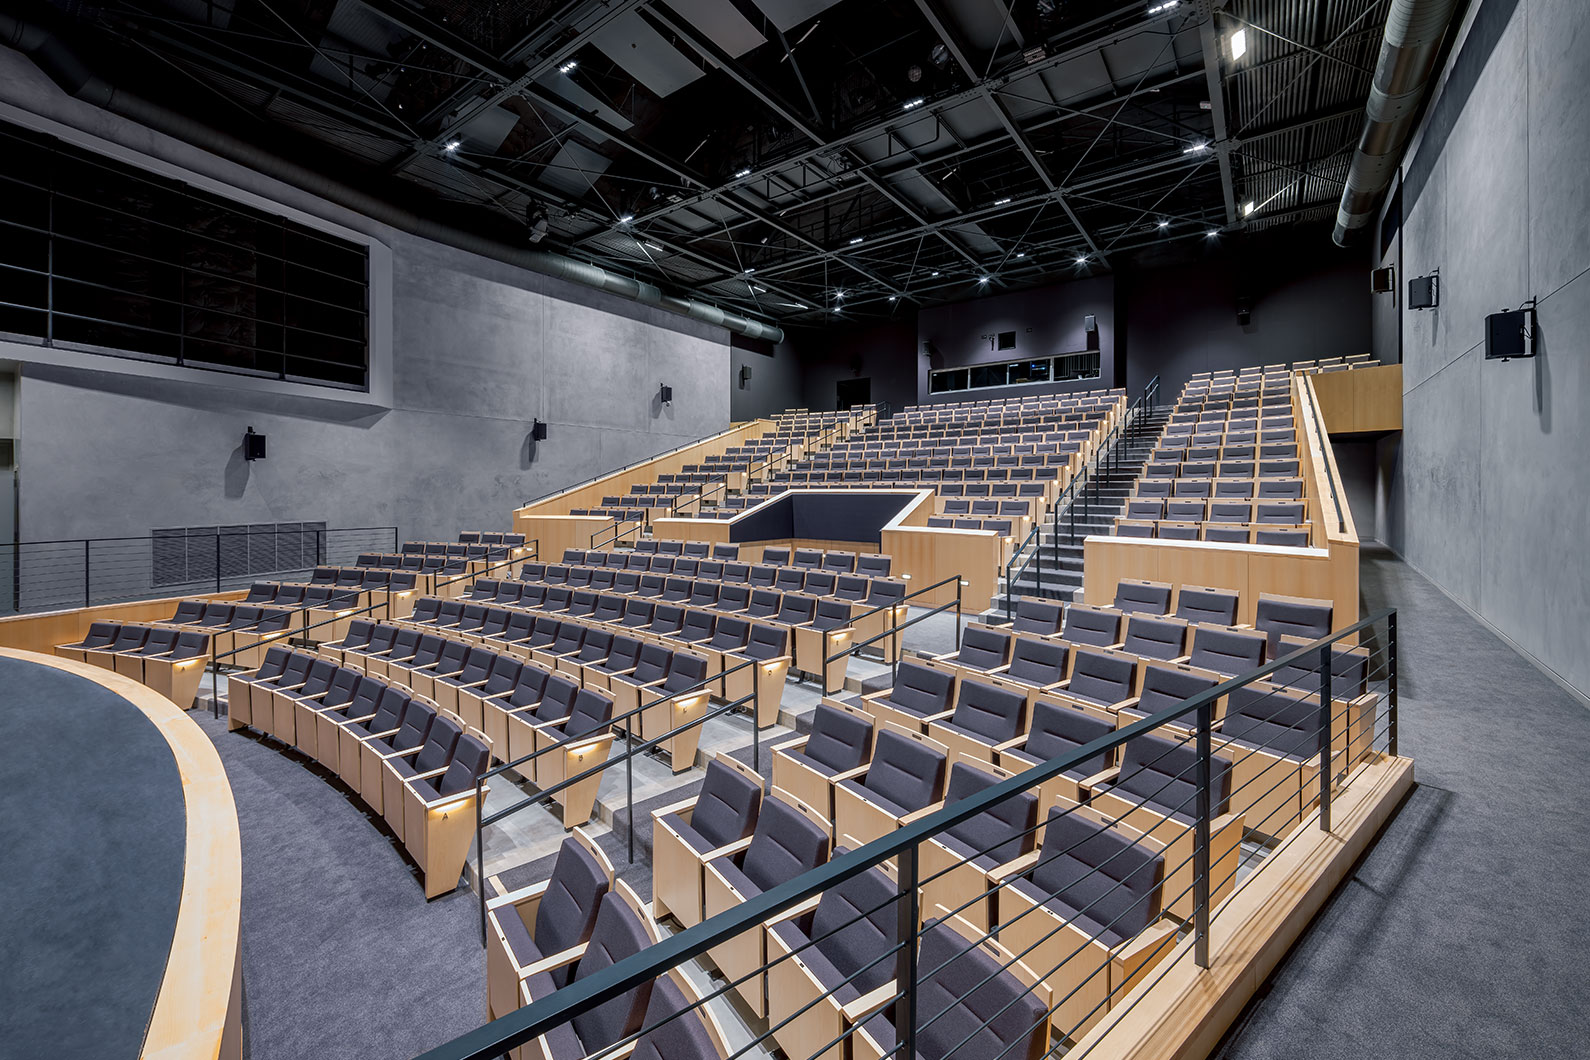 Interior photo of SRJC Burbank Auditorium looking towards audience seating